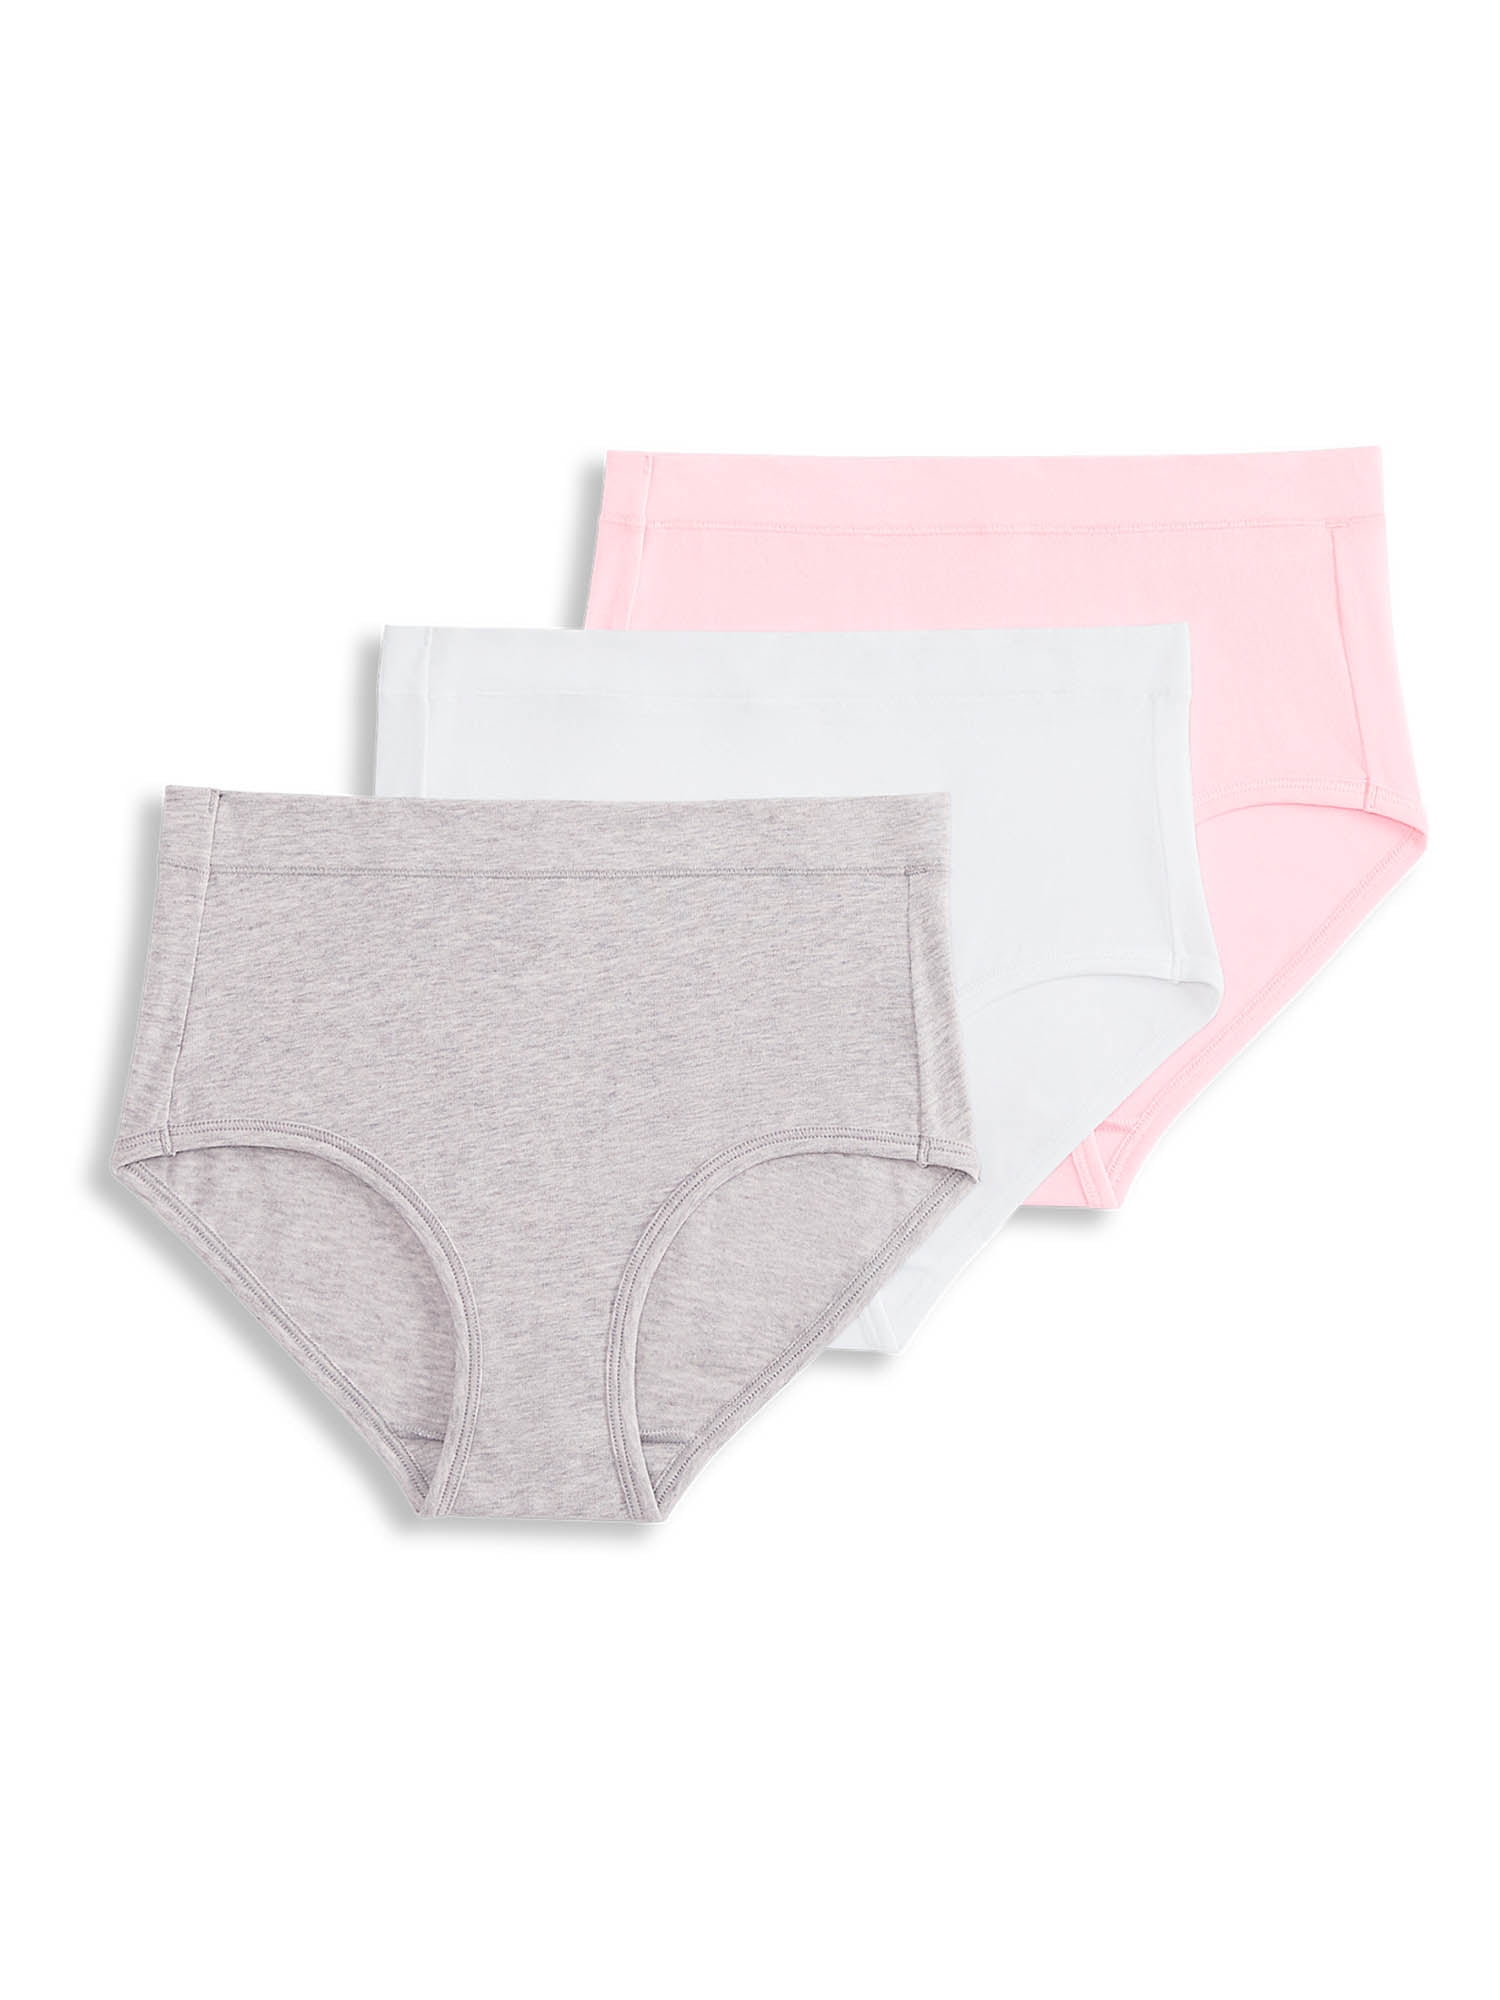 Jockey® Essentials Girls' Cotton Stretch Brief Panty- 3 Pack, Sizes S-XL (6-16)  